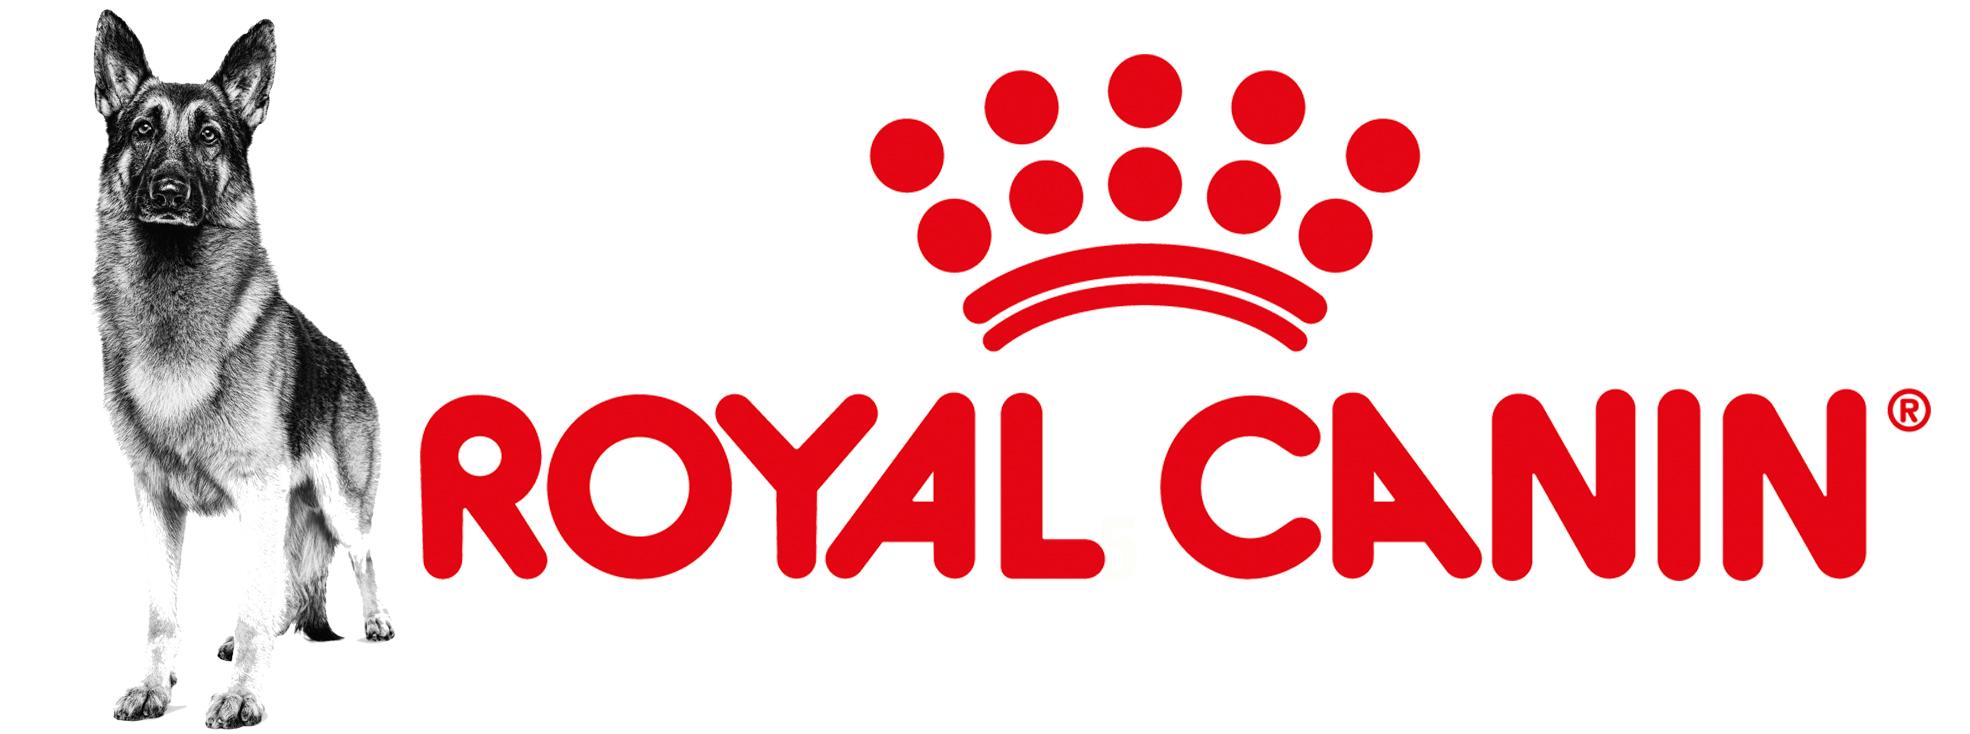 royal canin logo with dog pic